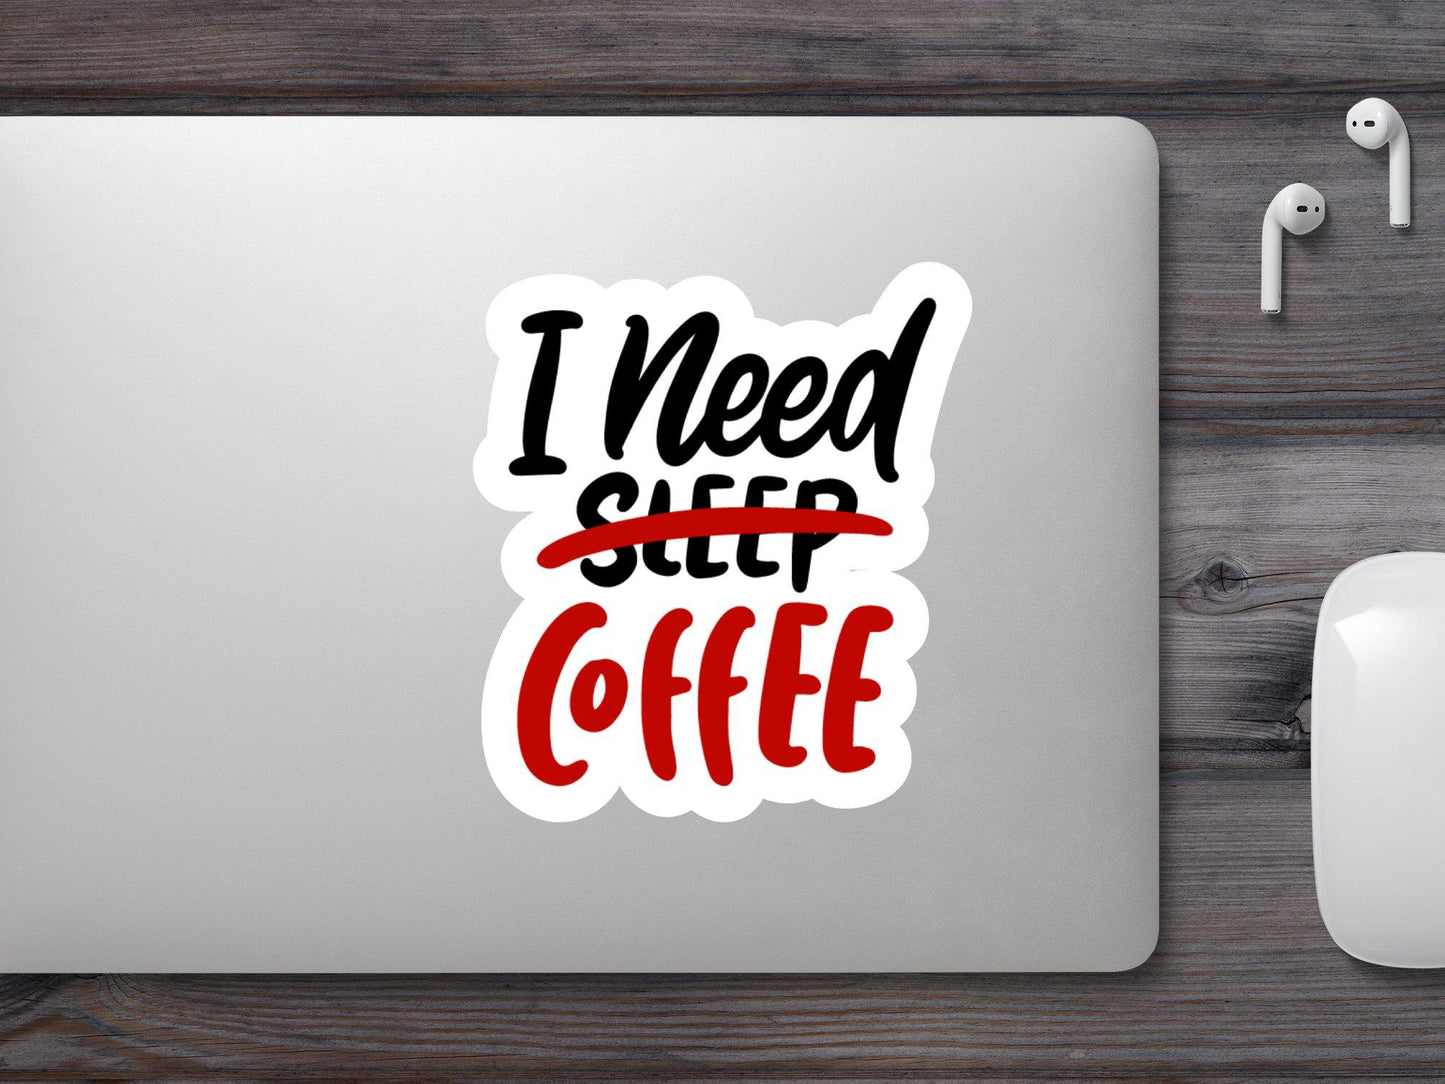 I Need Sleep Coffee Sticker